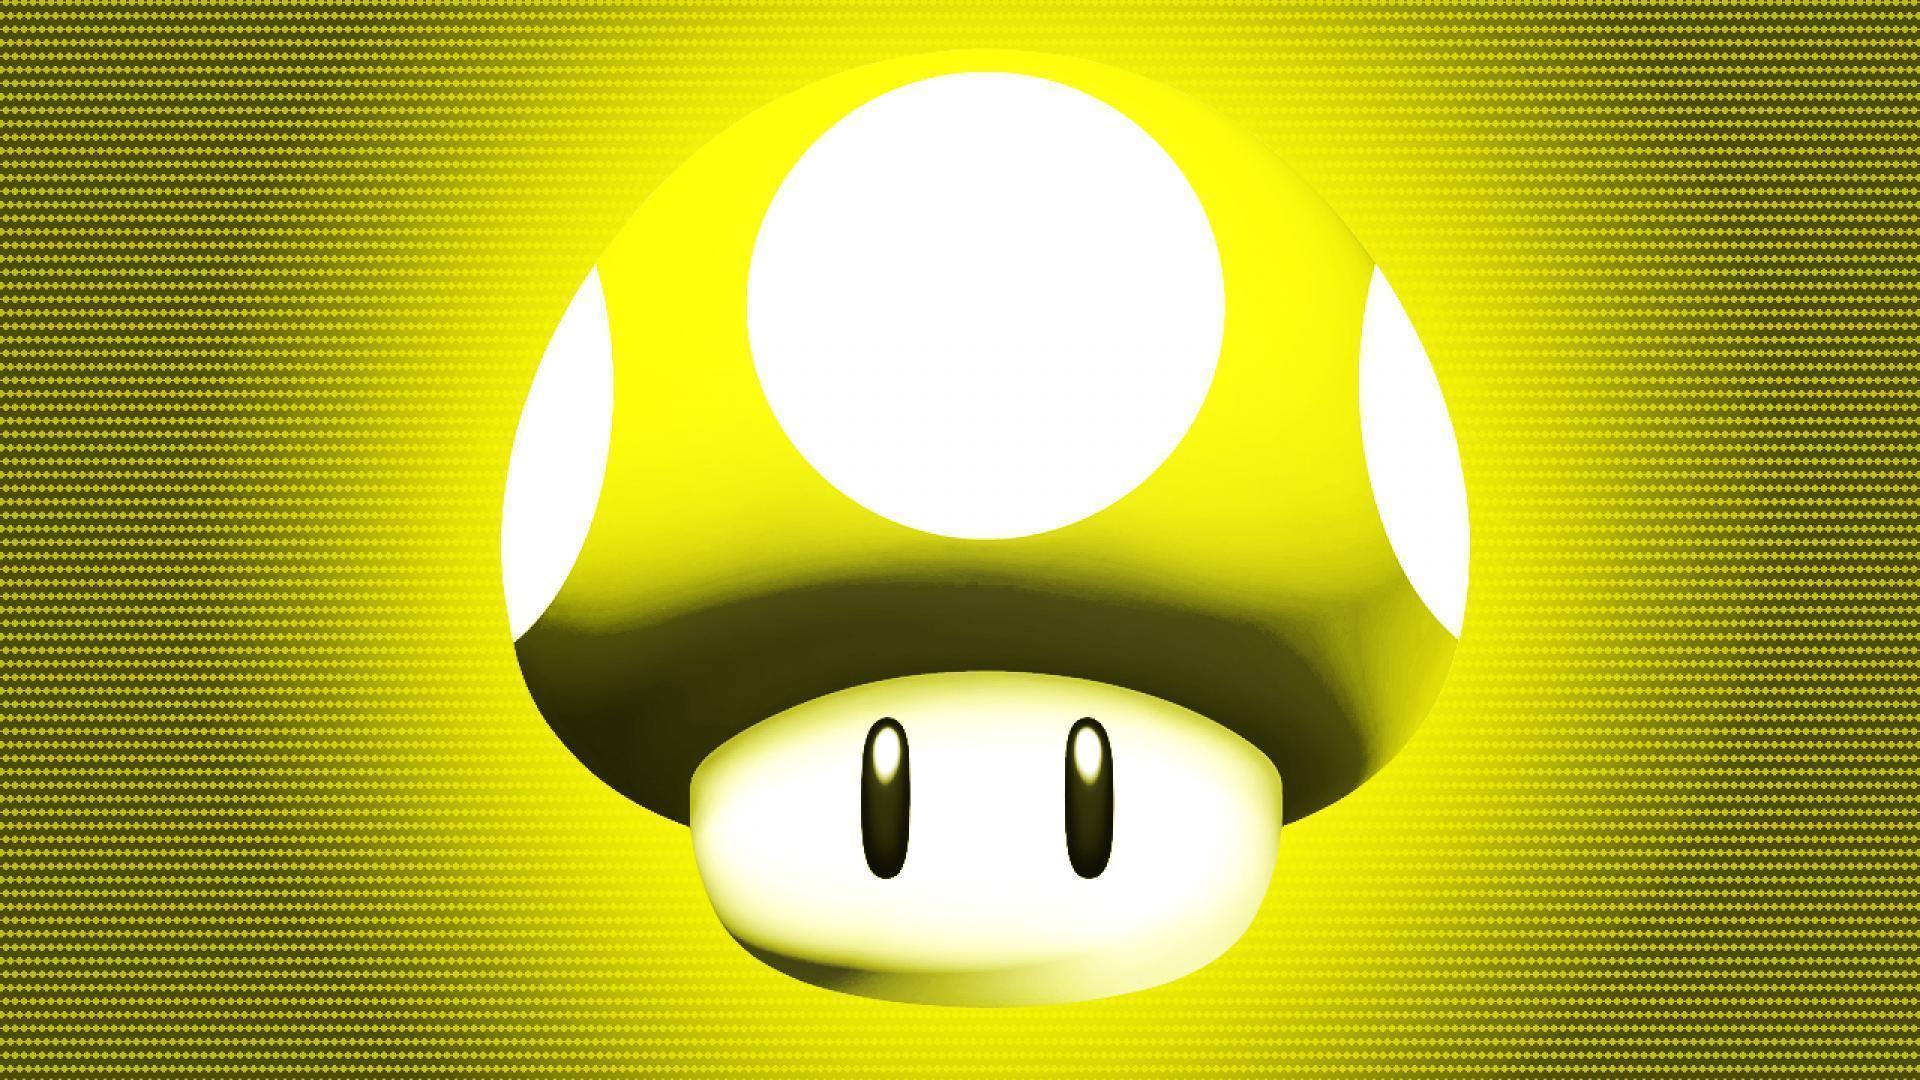 Mario Mushroom Background